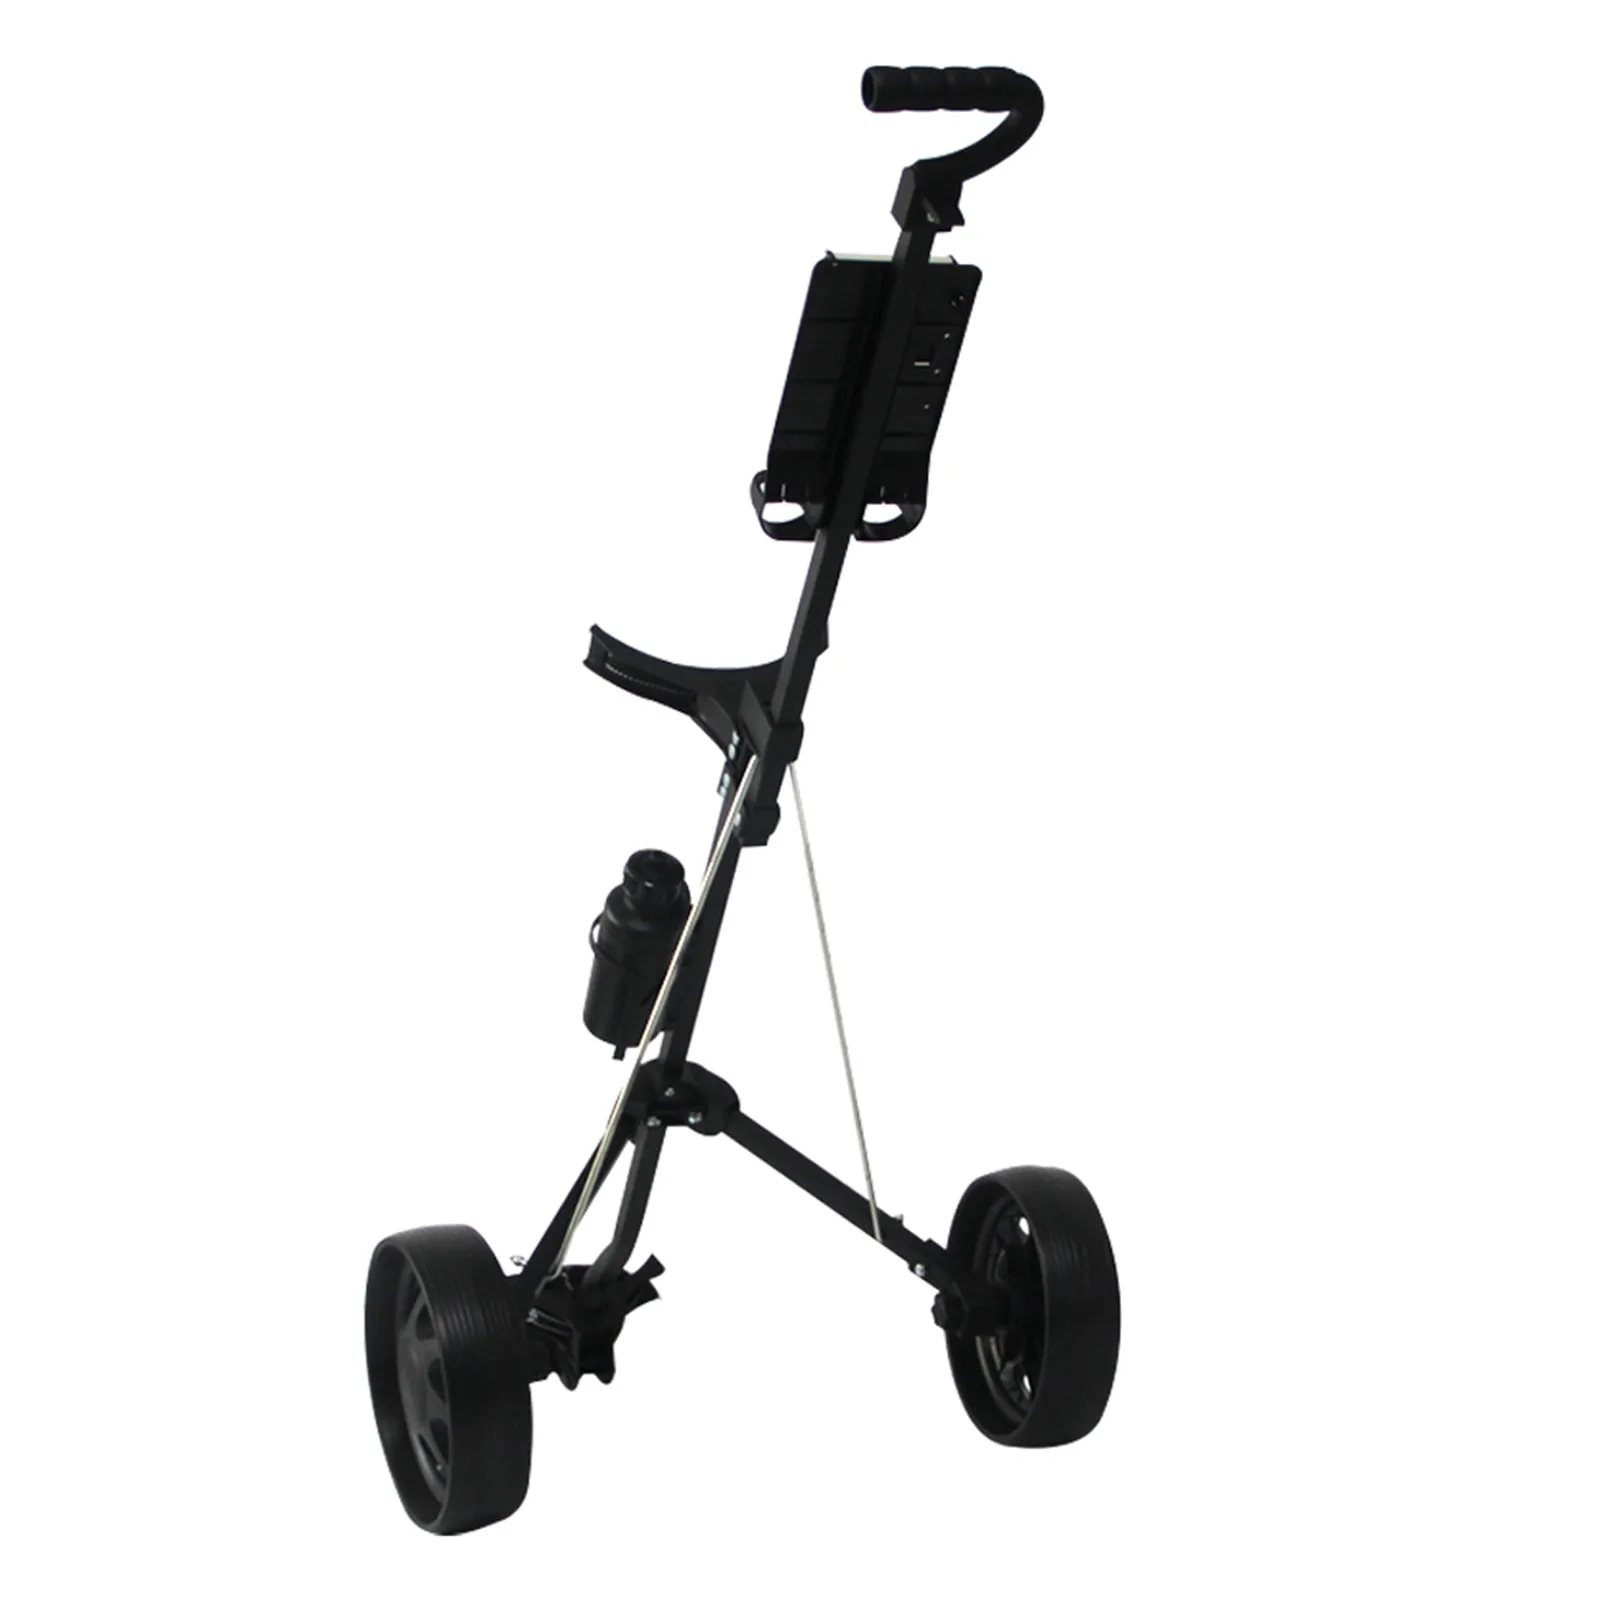 Foldable 2 Wheel Golf Pull Push Cart Trolley Golf Buggies Scorecard Holder